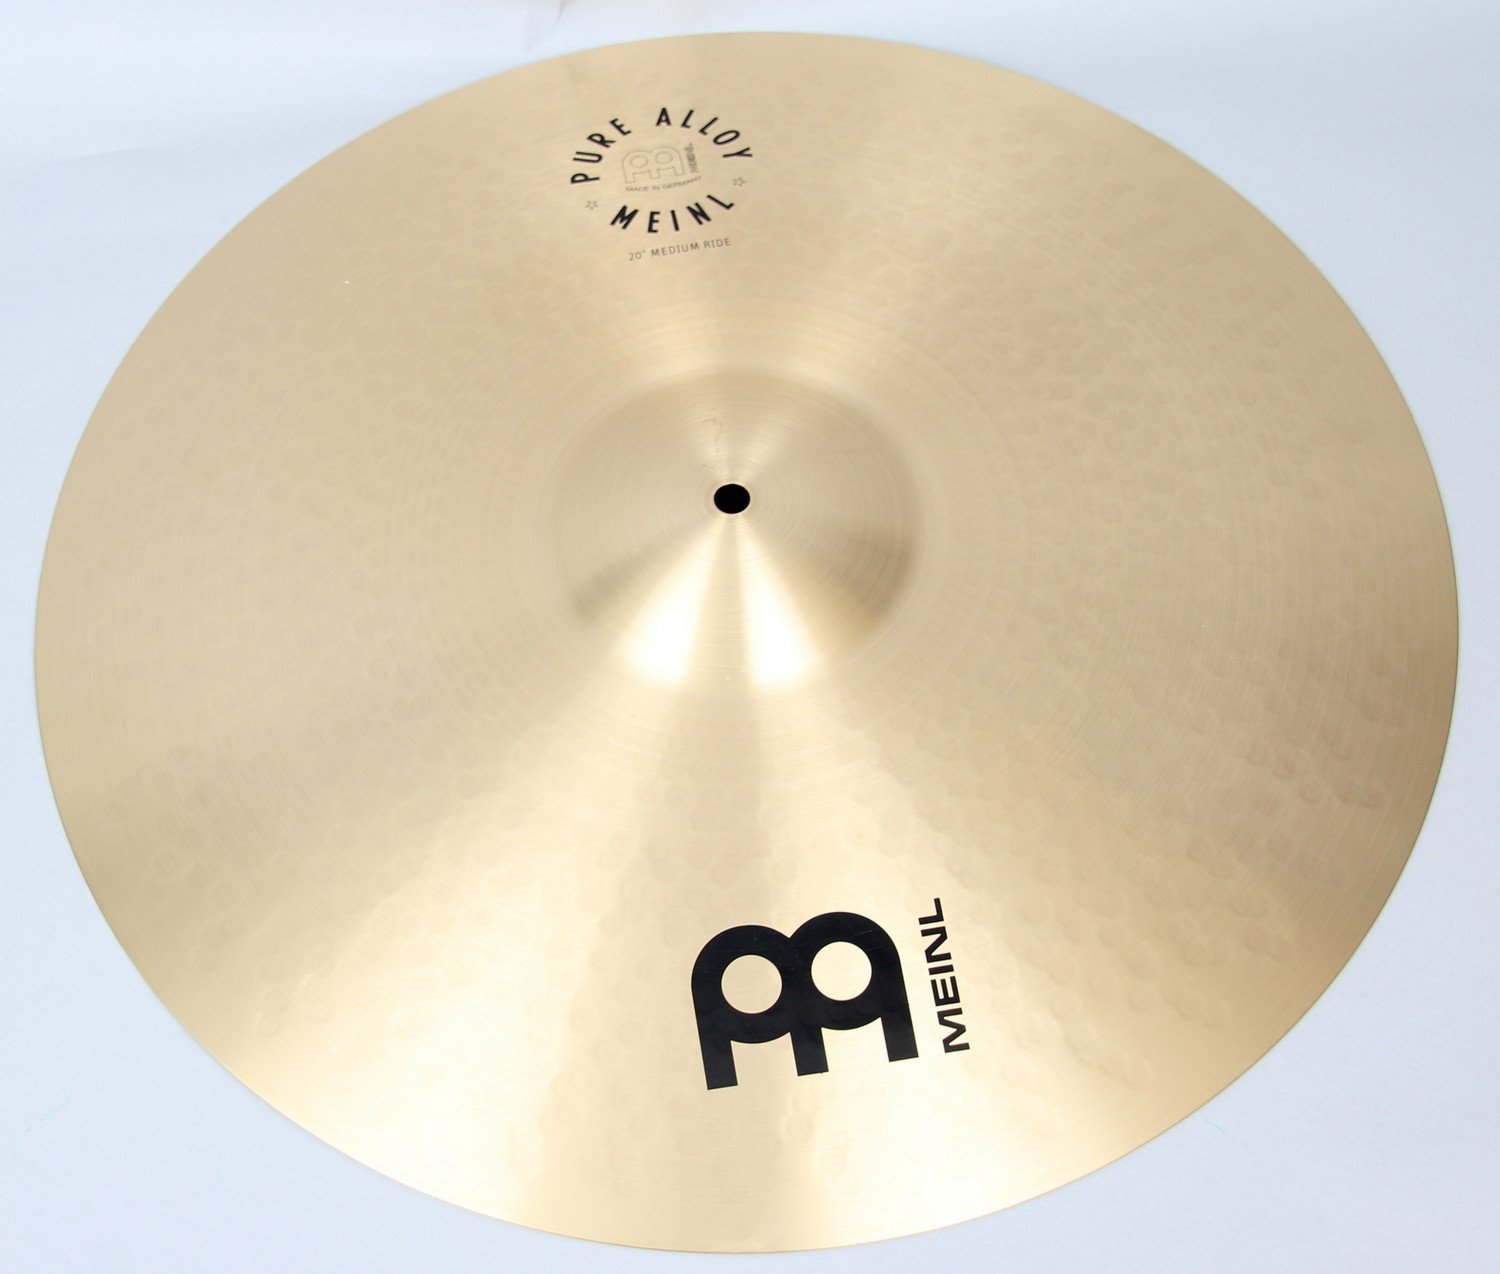 Meinl 20" Pure Alloy Medium Ride Cymbal | PA20MR